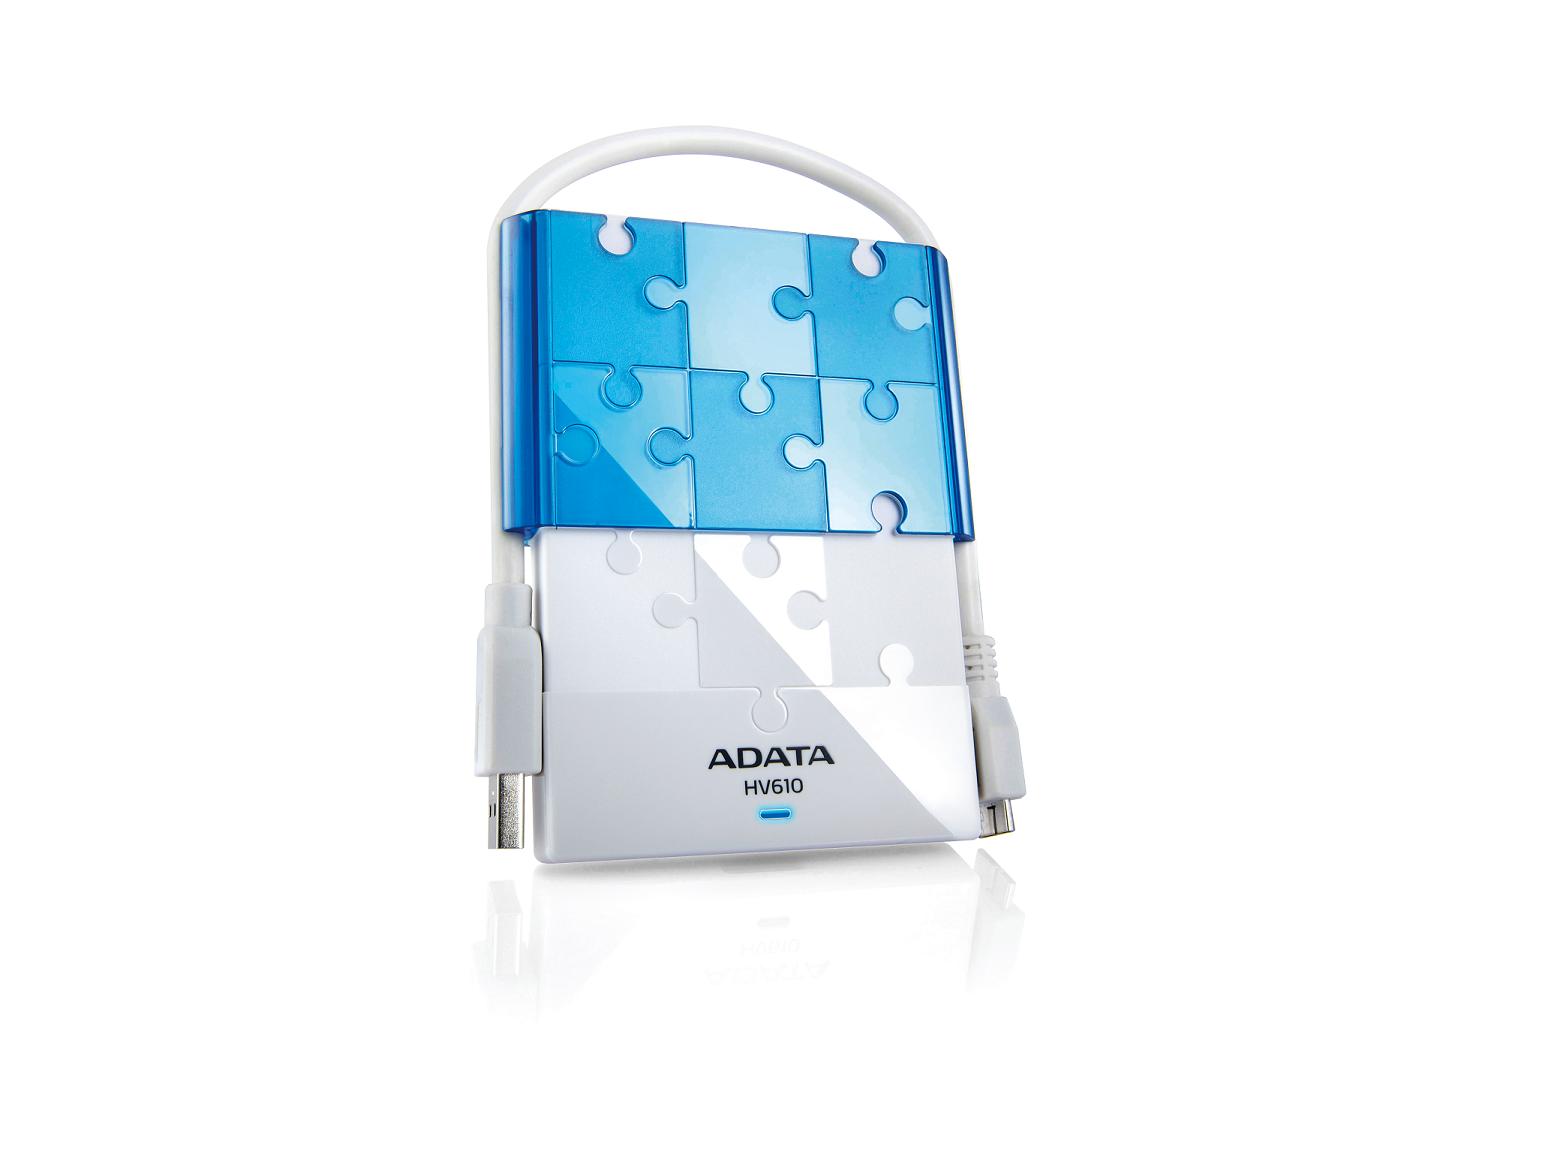 ADATA Launches DashDrive HV610 USB 3.0 External Hard Drive